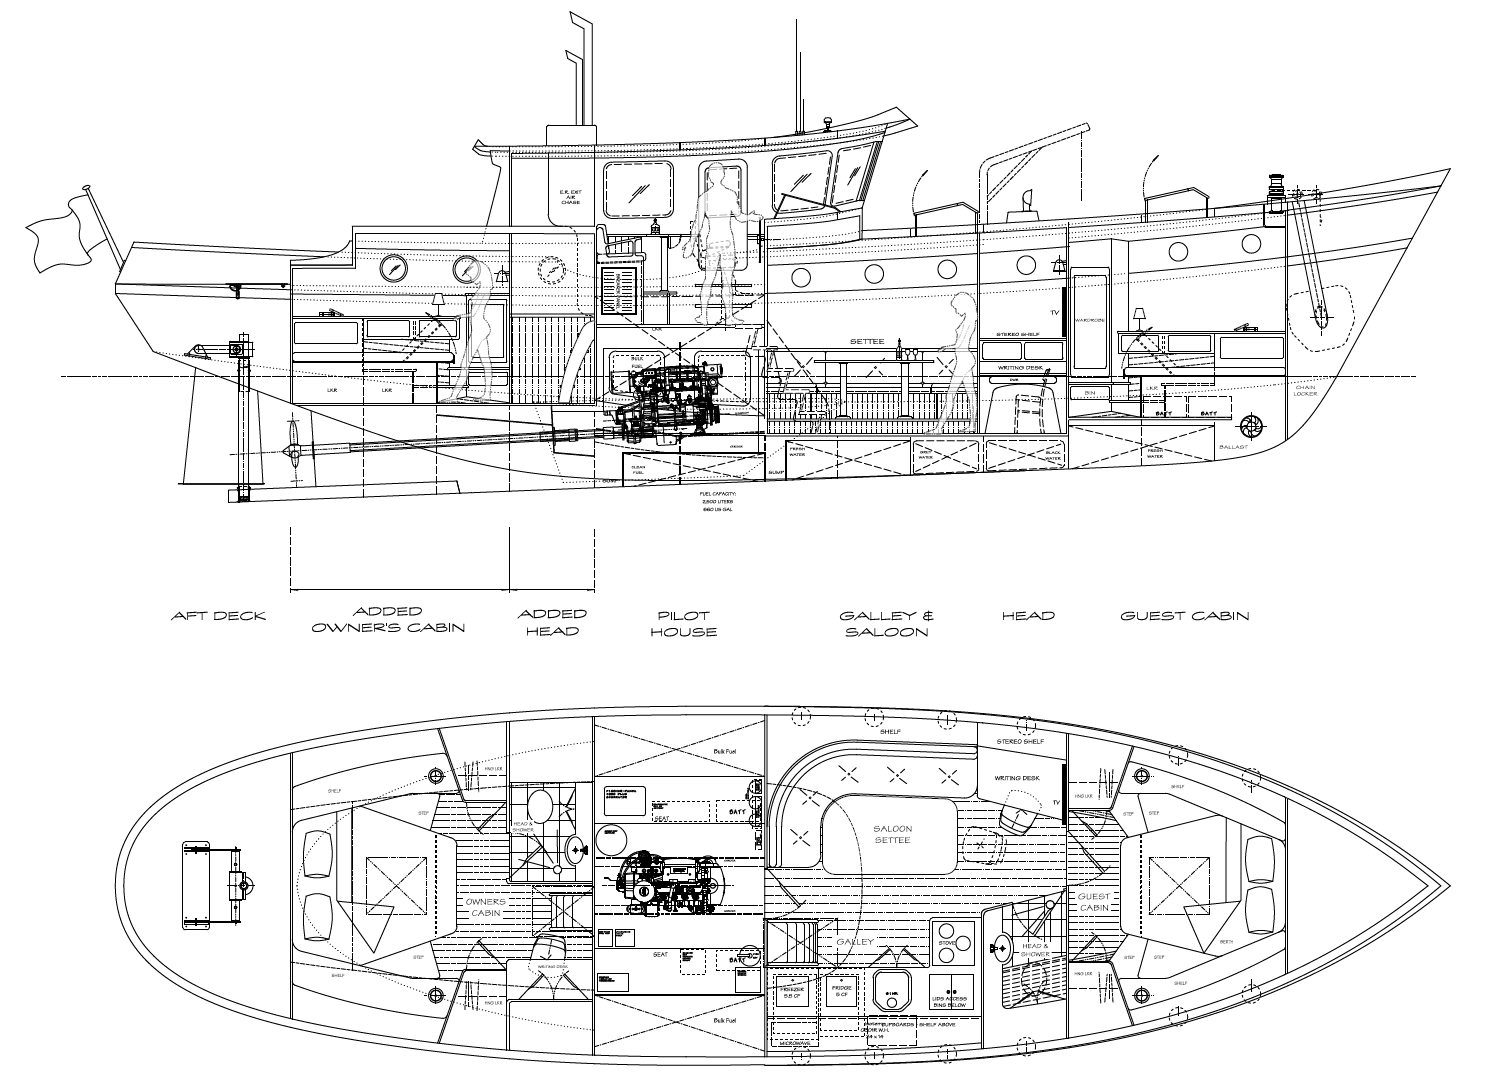 54' Trawler Yacht FAR HORIZON - Kasten Marine Design, Inc.